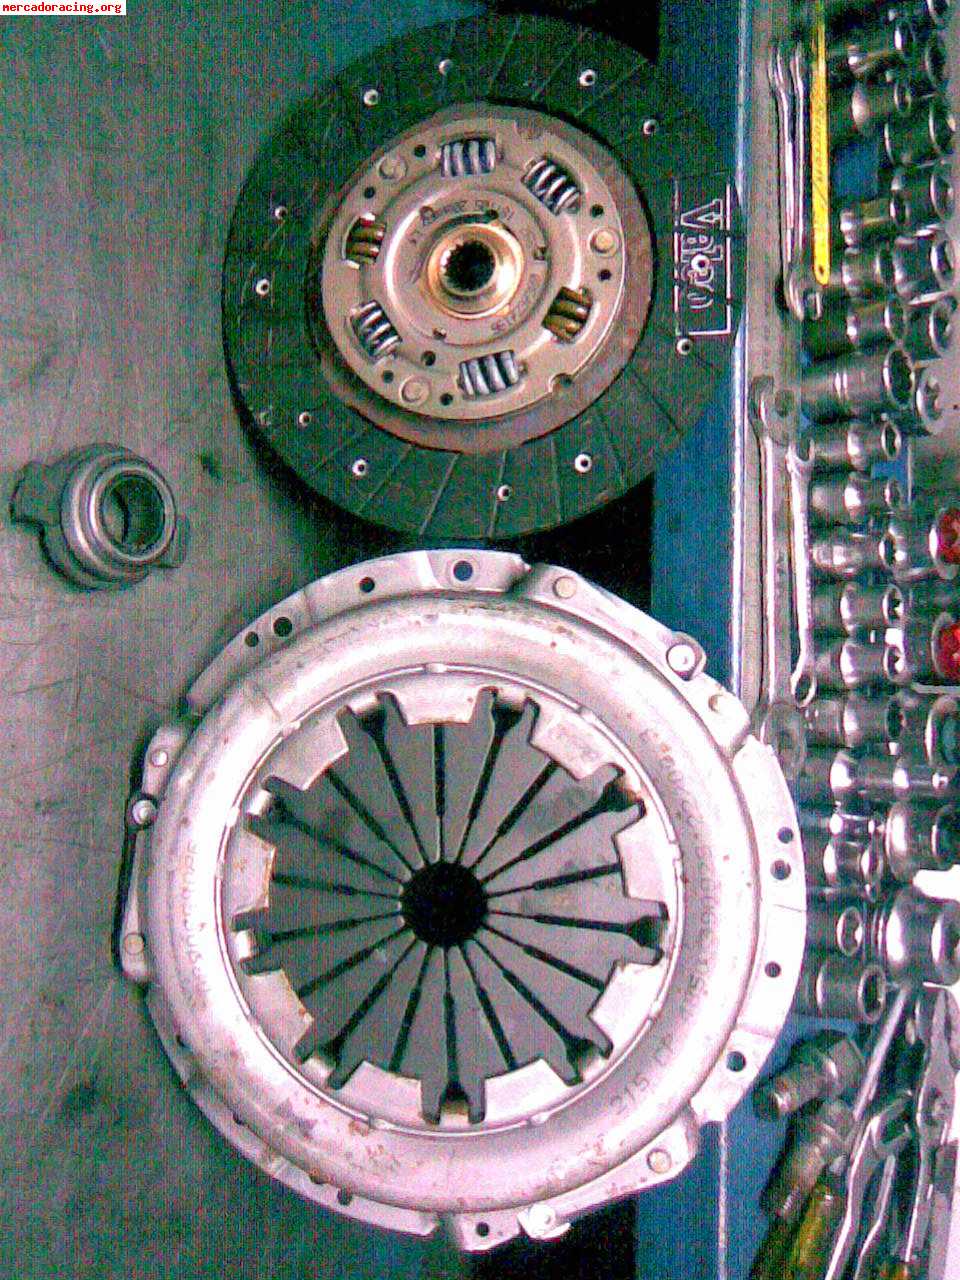 Kit embrague mi16 y bobinas de xsara 167cv